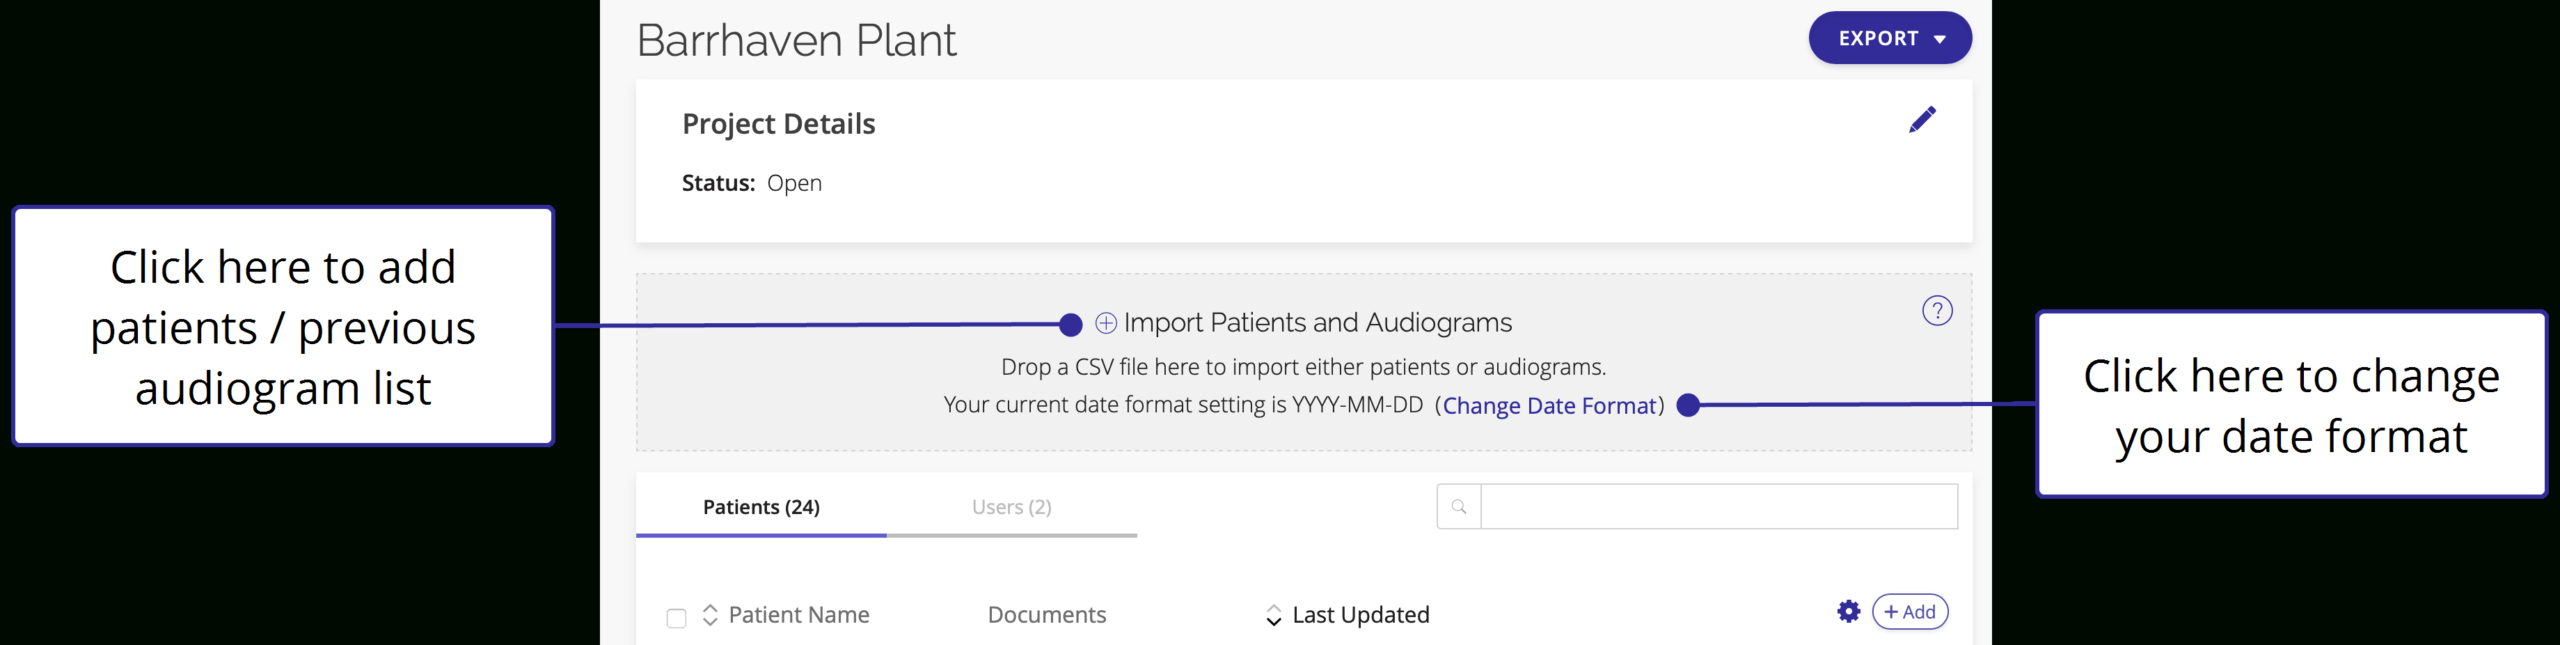 Patient & Audiogram Import Instructions Regarding Blank Audiogram Template Download